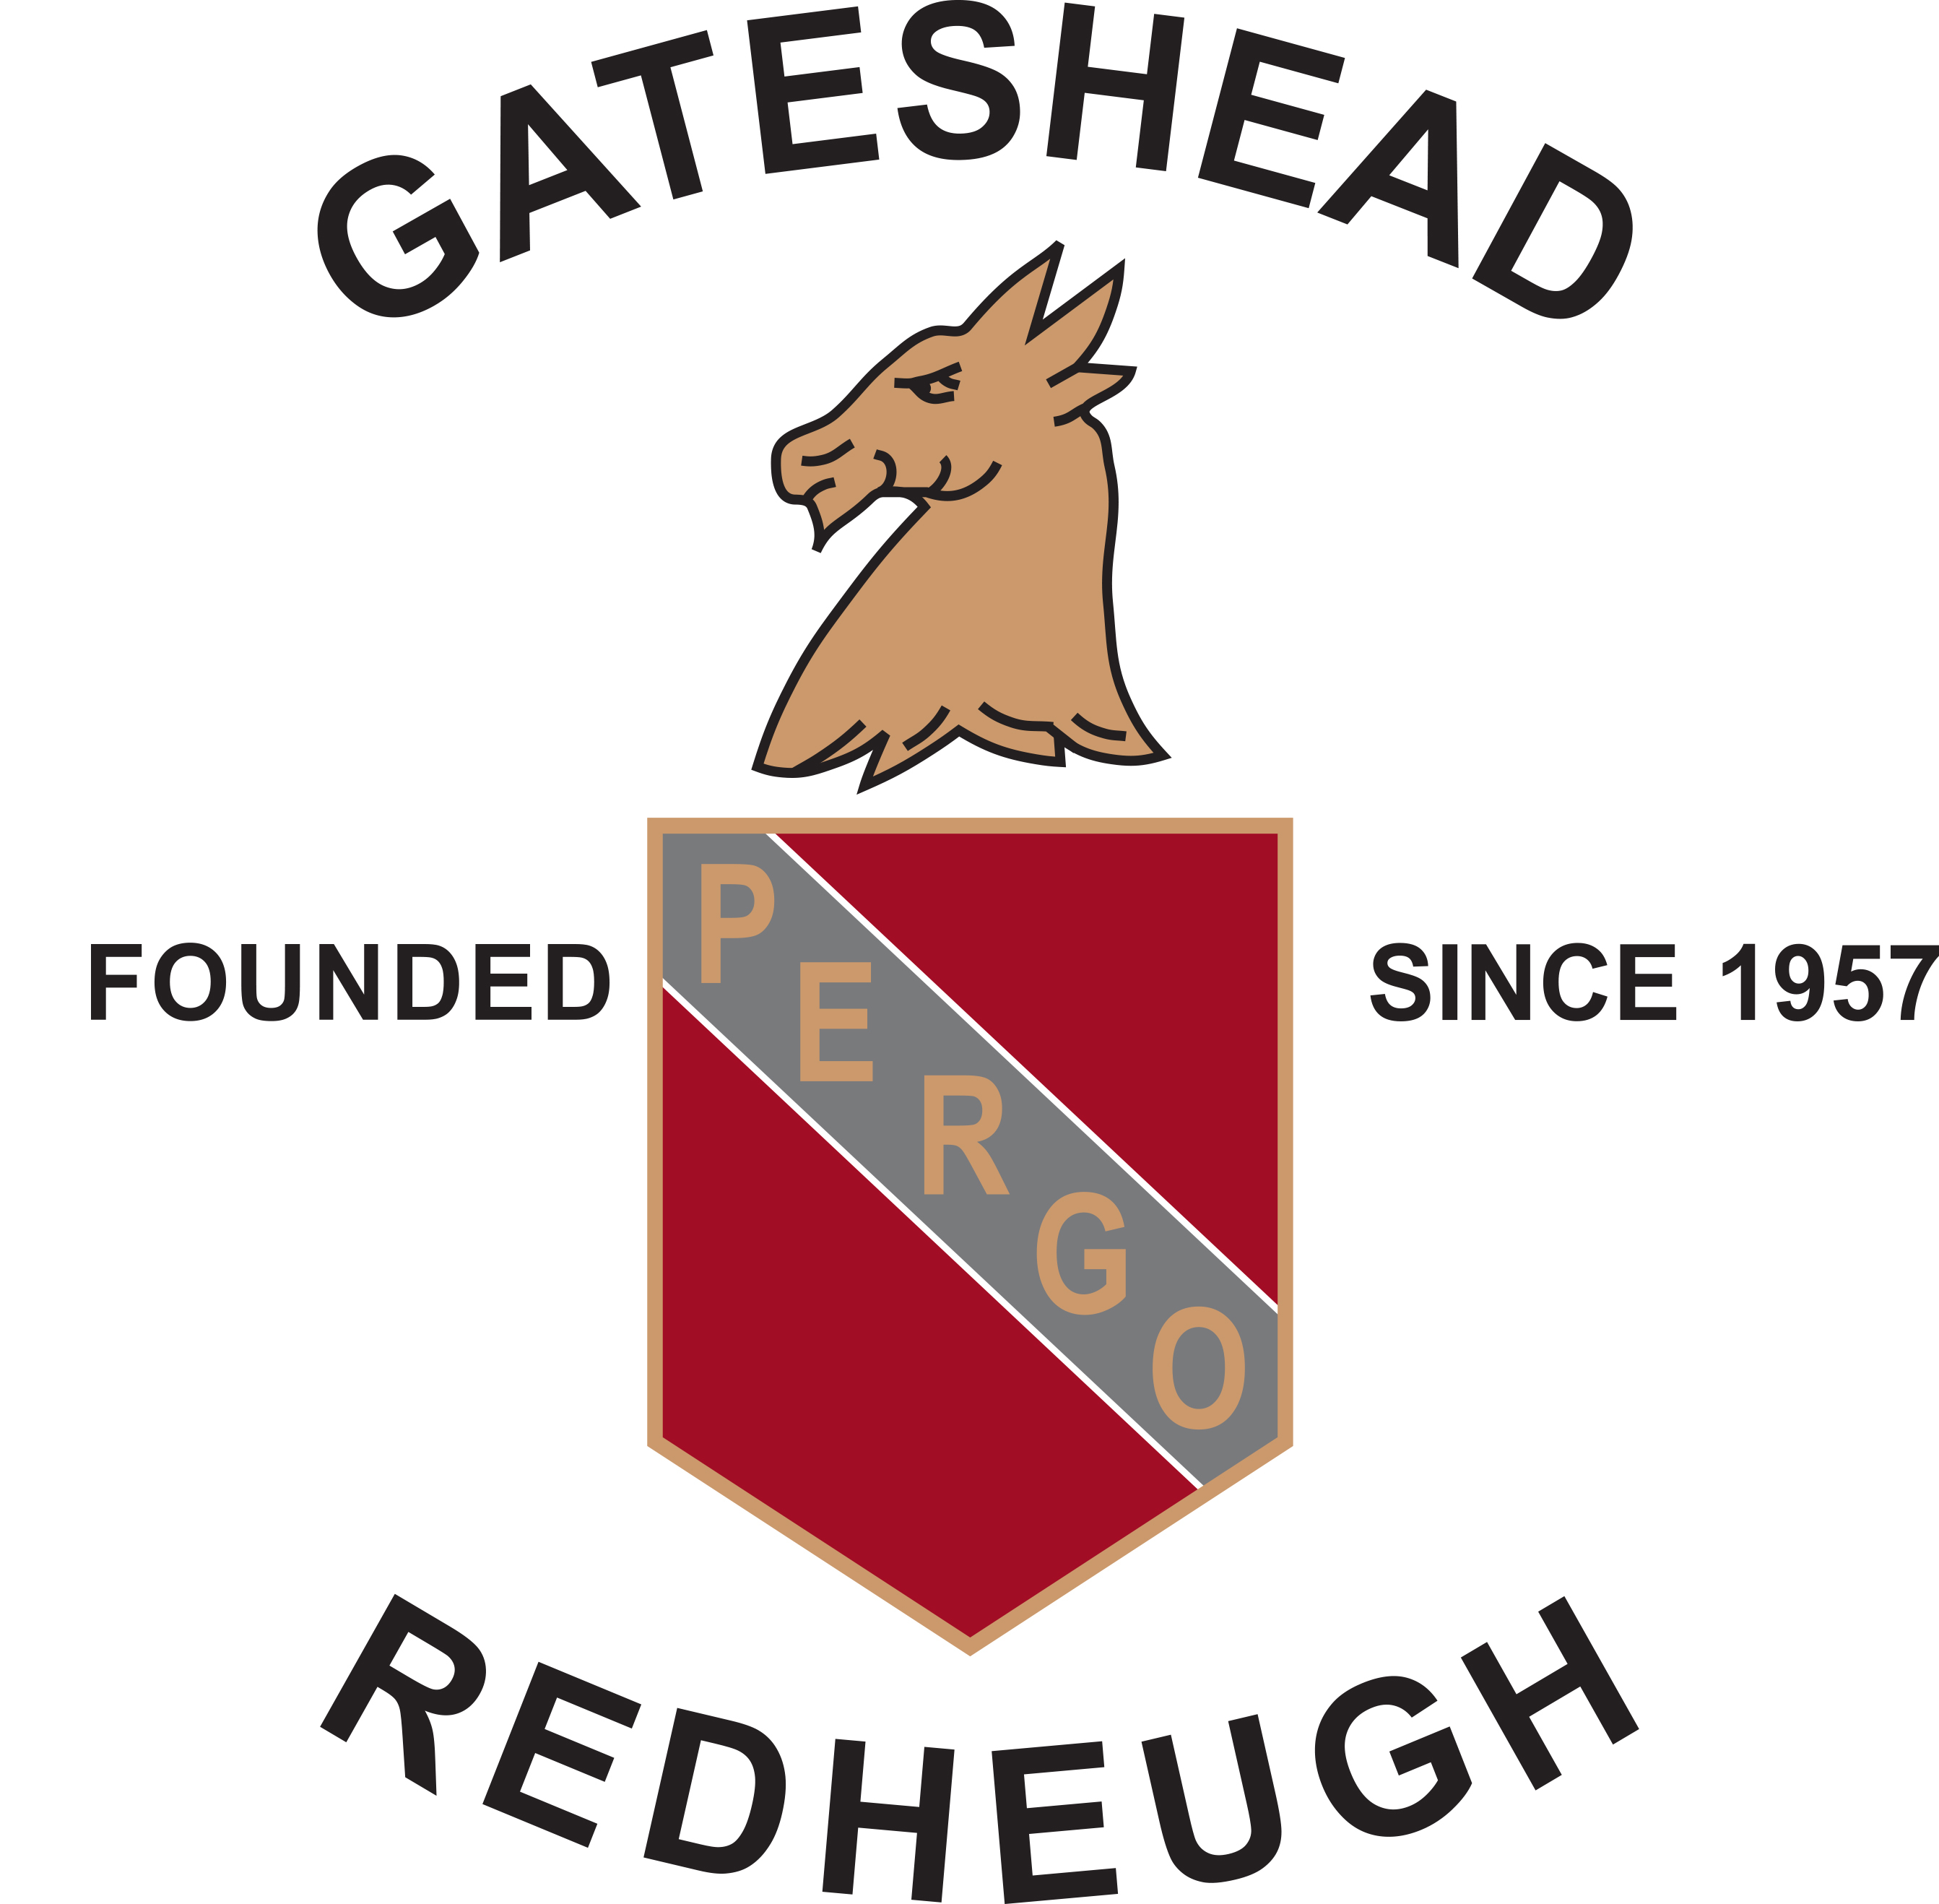 Gateshead Redheugh (1957)